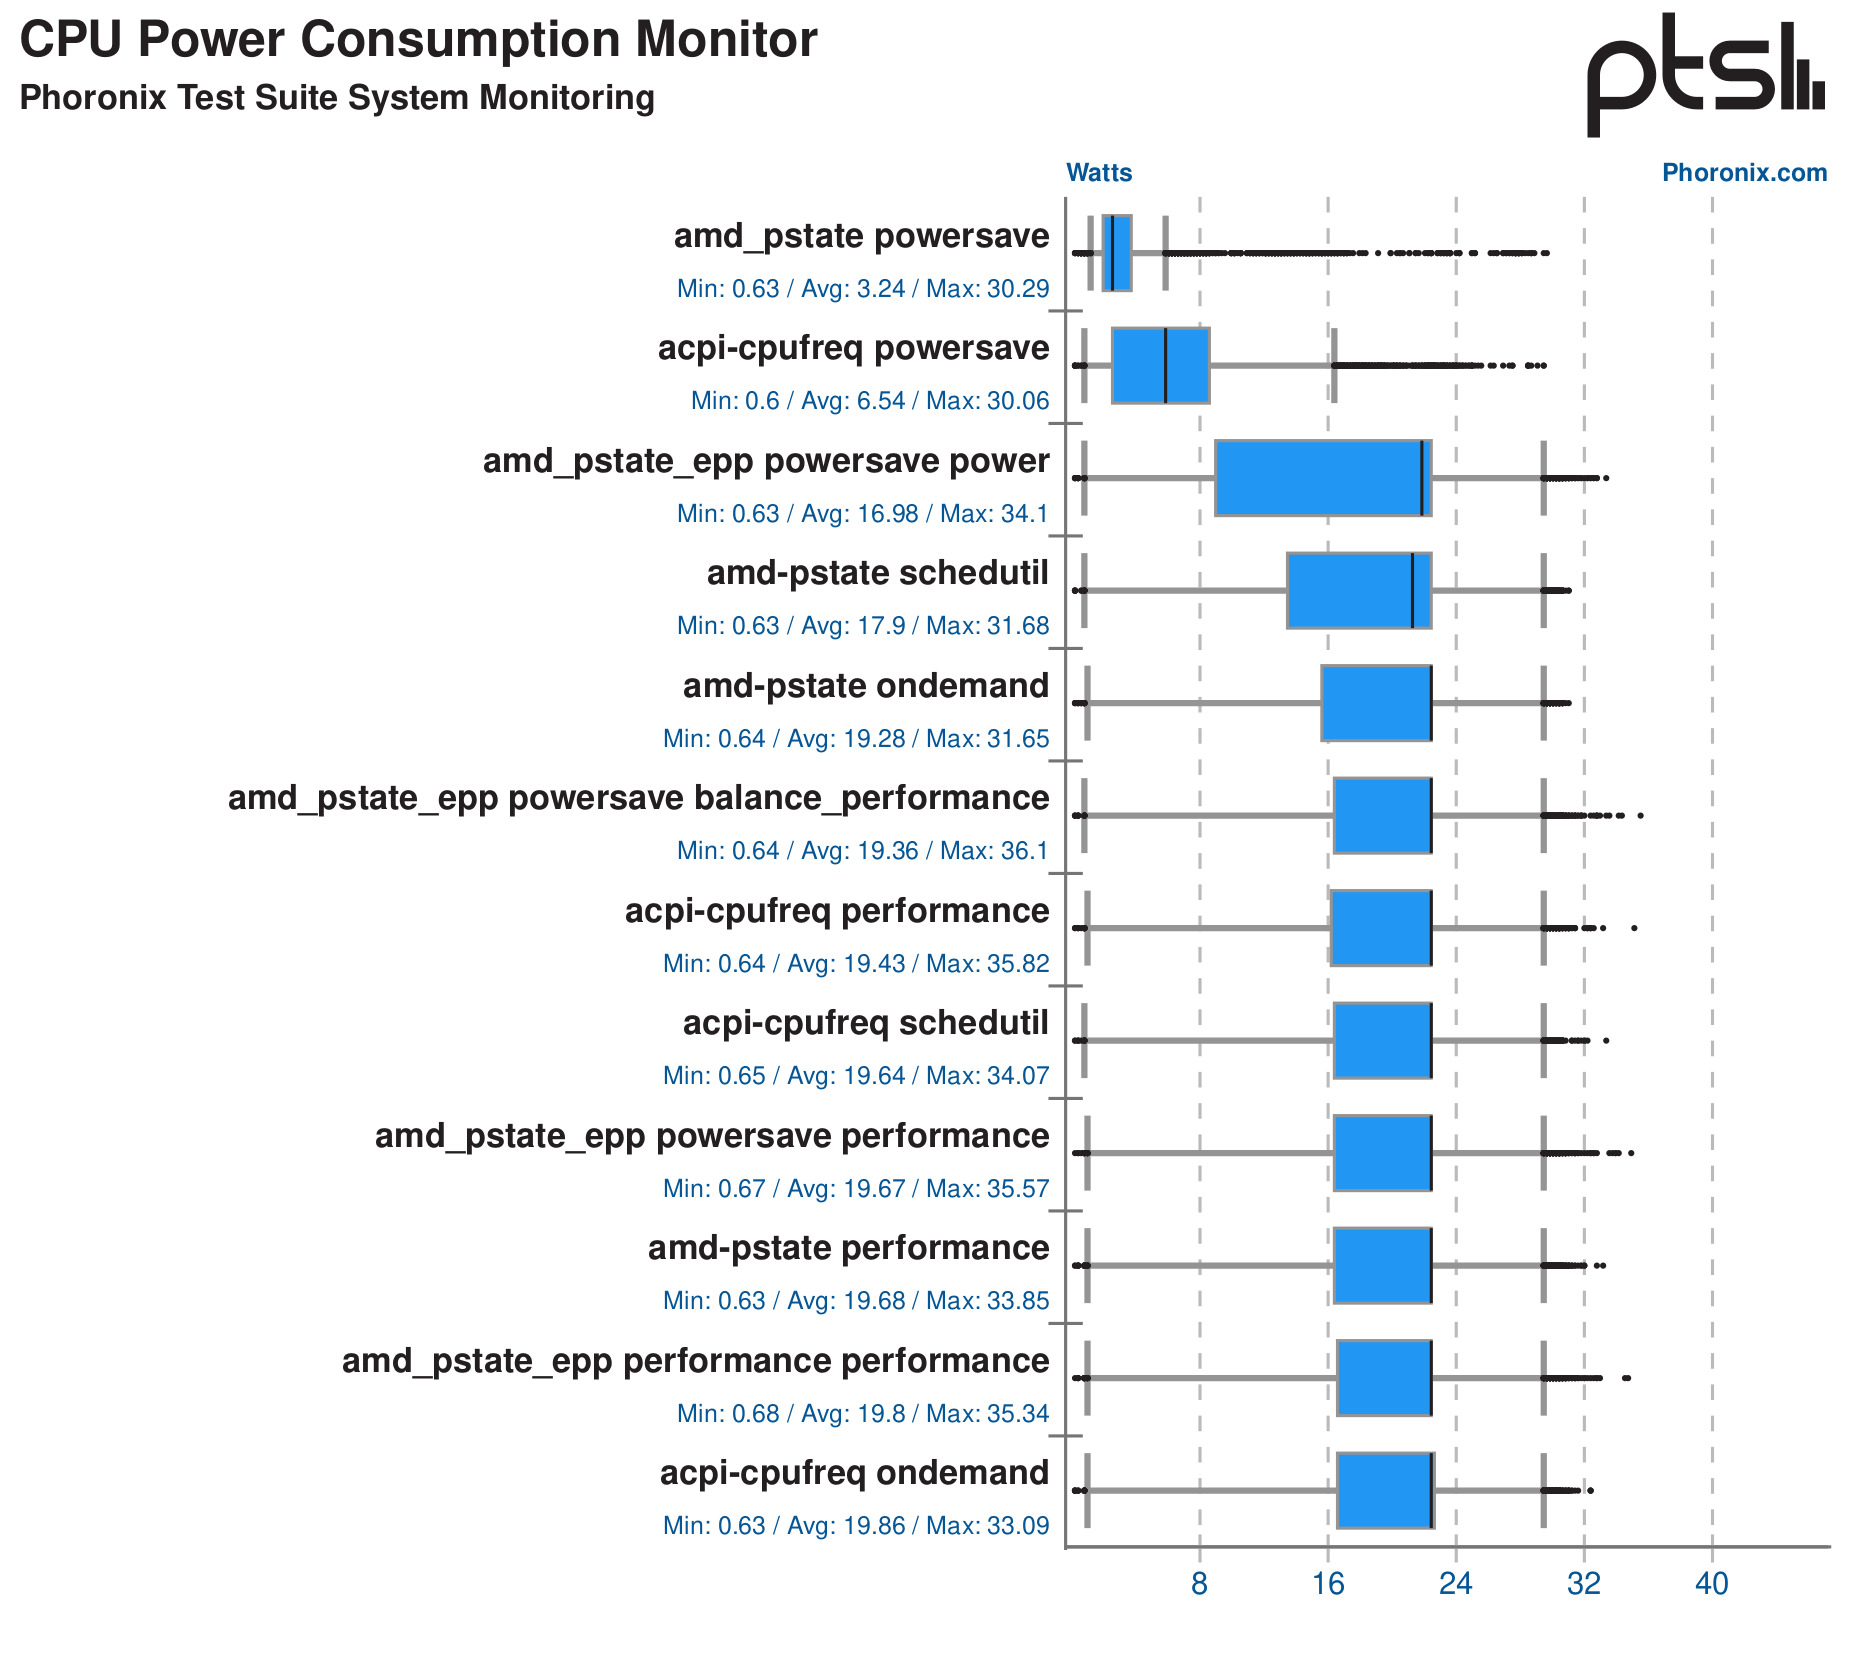 cpu-power-consumption-monitor-ptssm.jpg